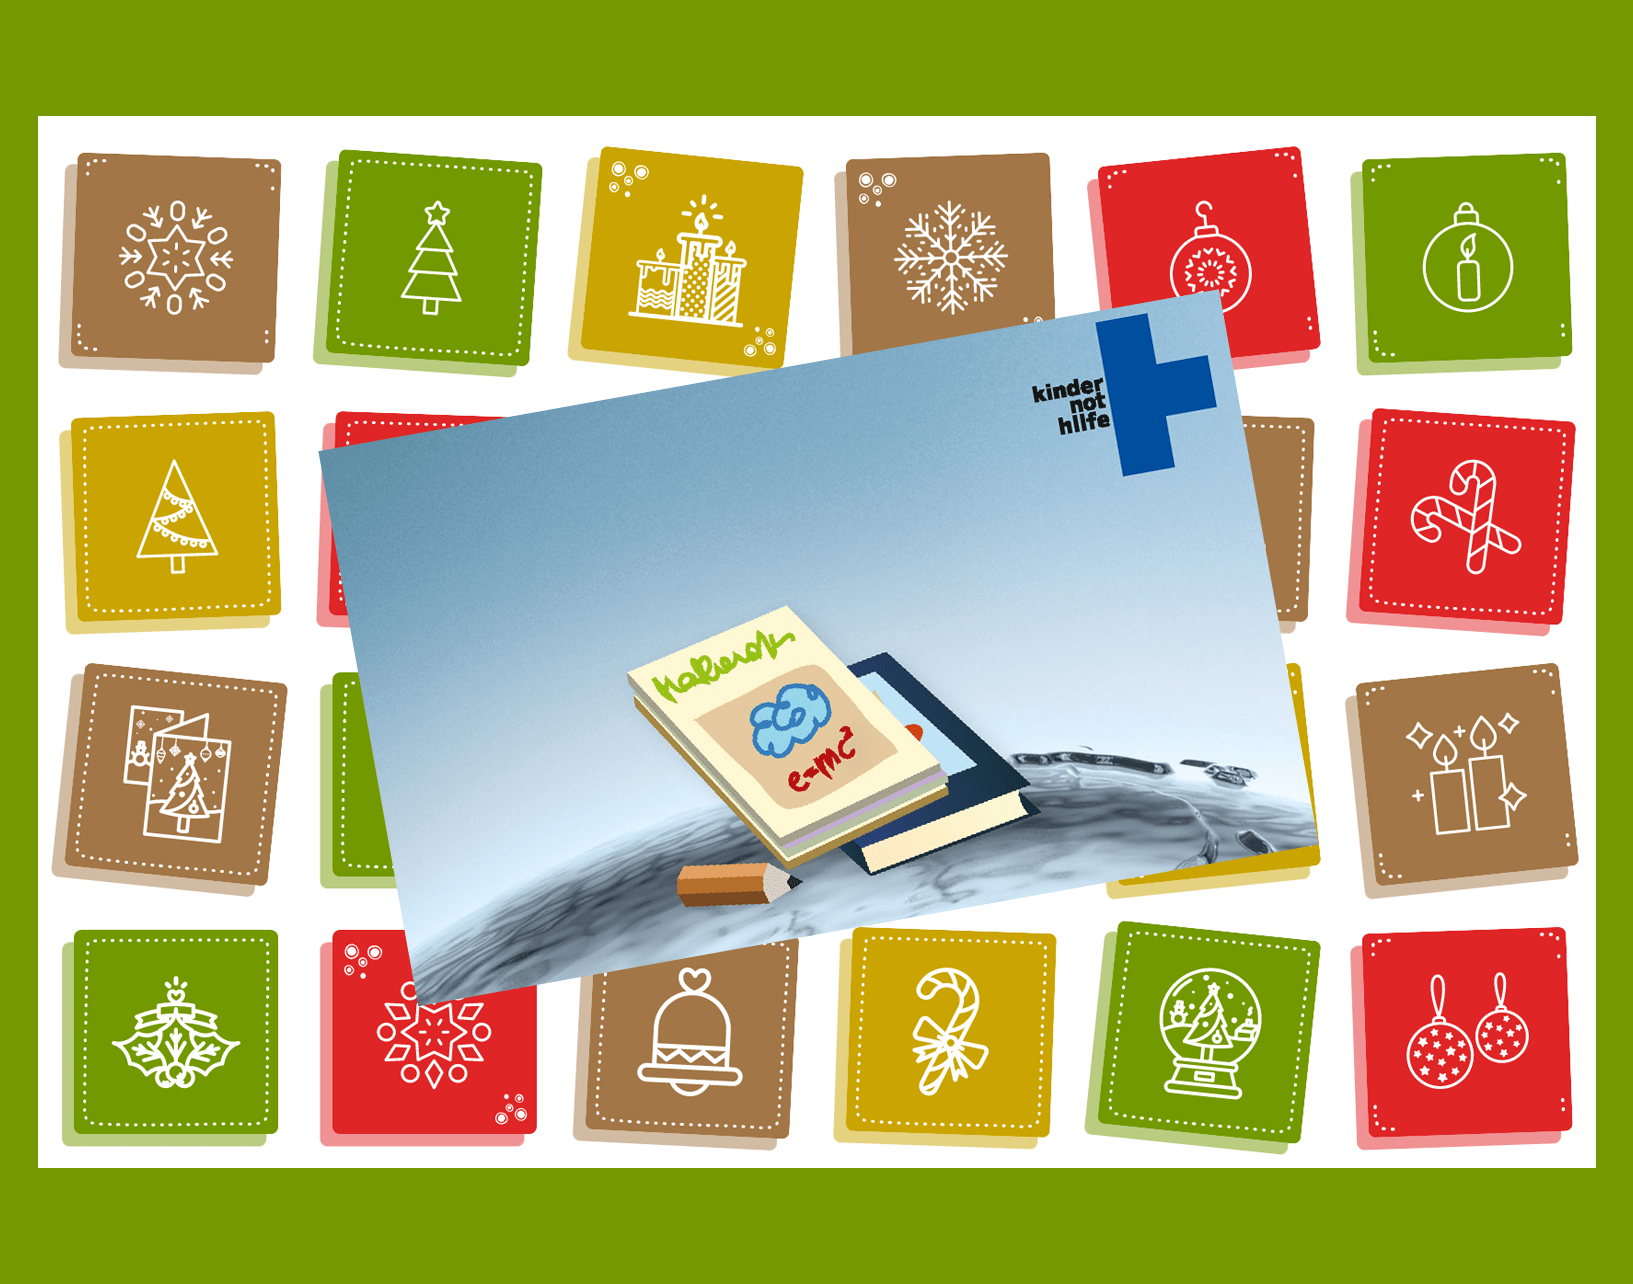 Kindernothilfe-Adventkalender 2022
Spendenshop 
Österreich